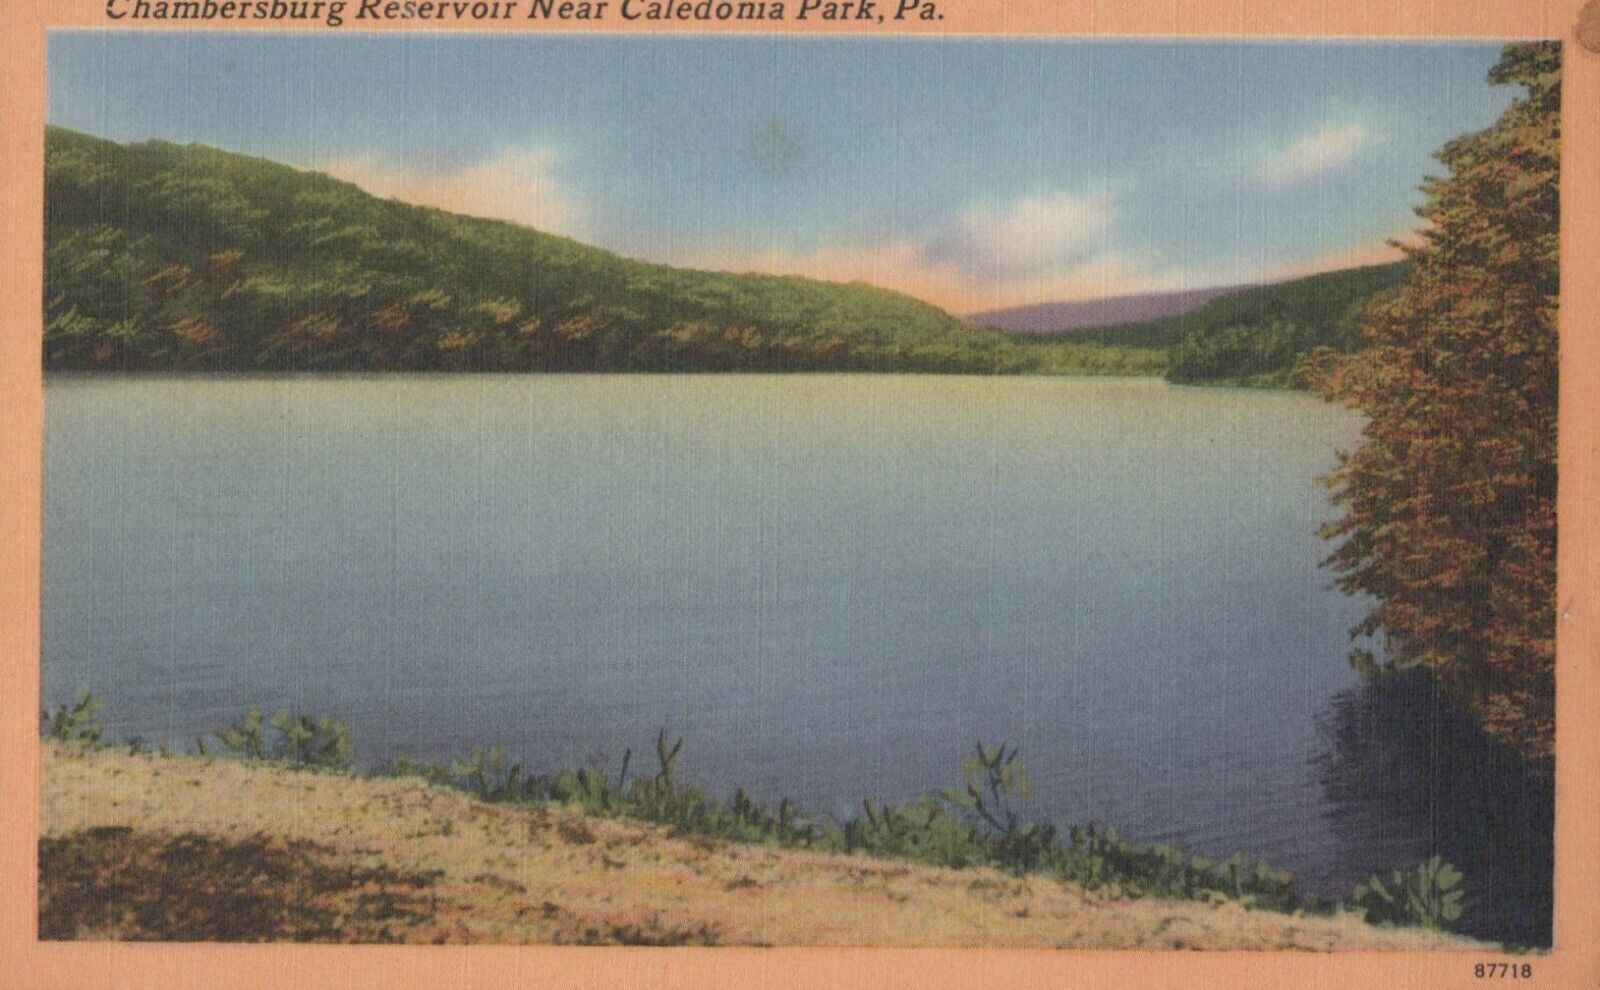 Caledonia Park Pennsylvania Chambersburg Reservoir Vintage Linen Postcard